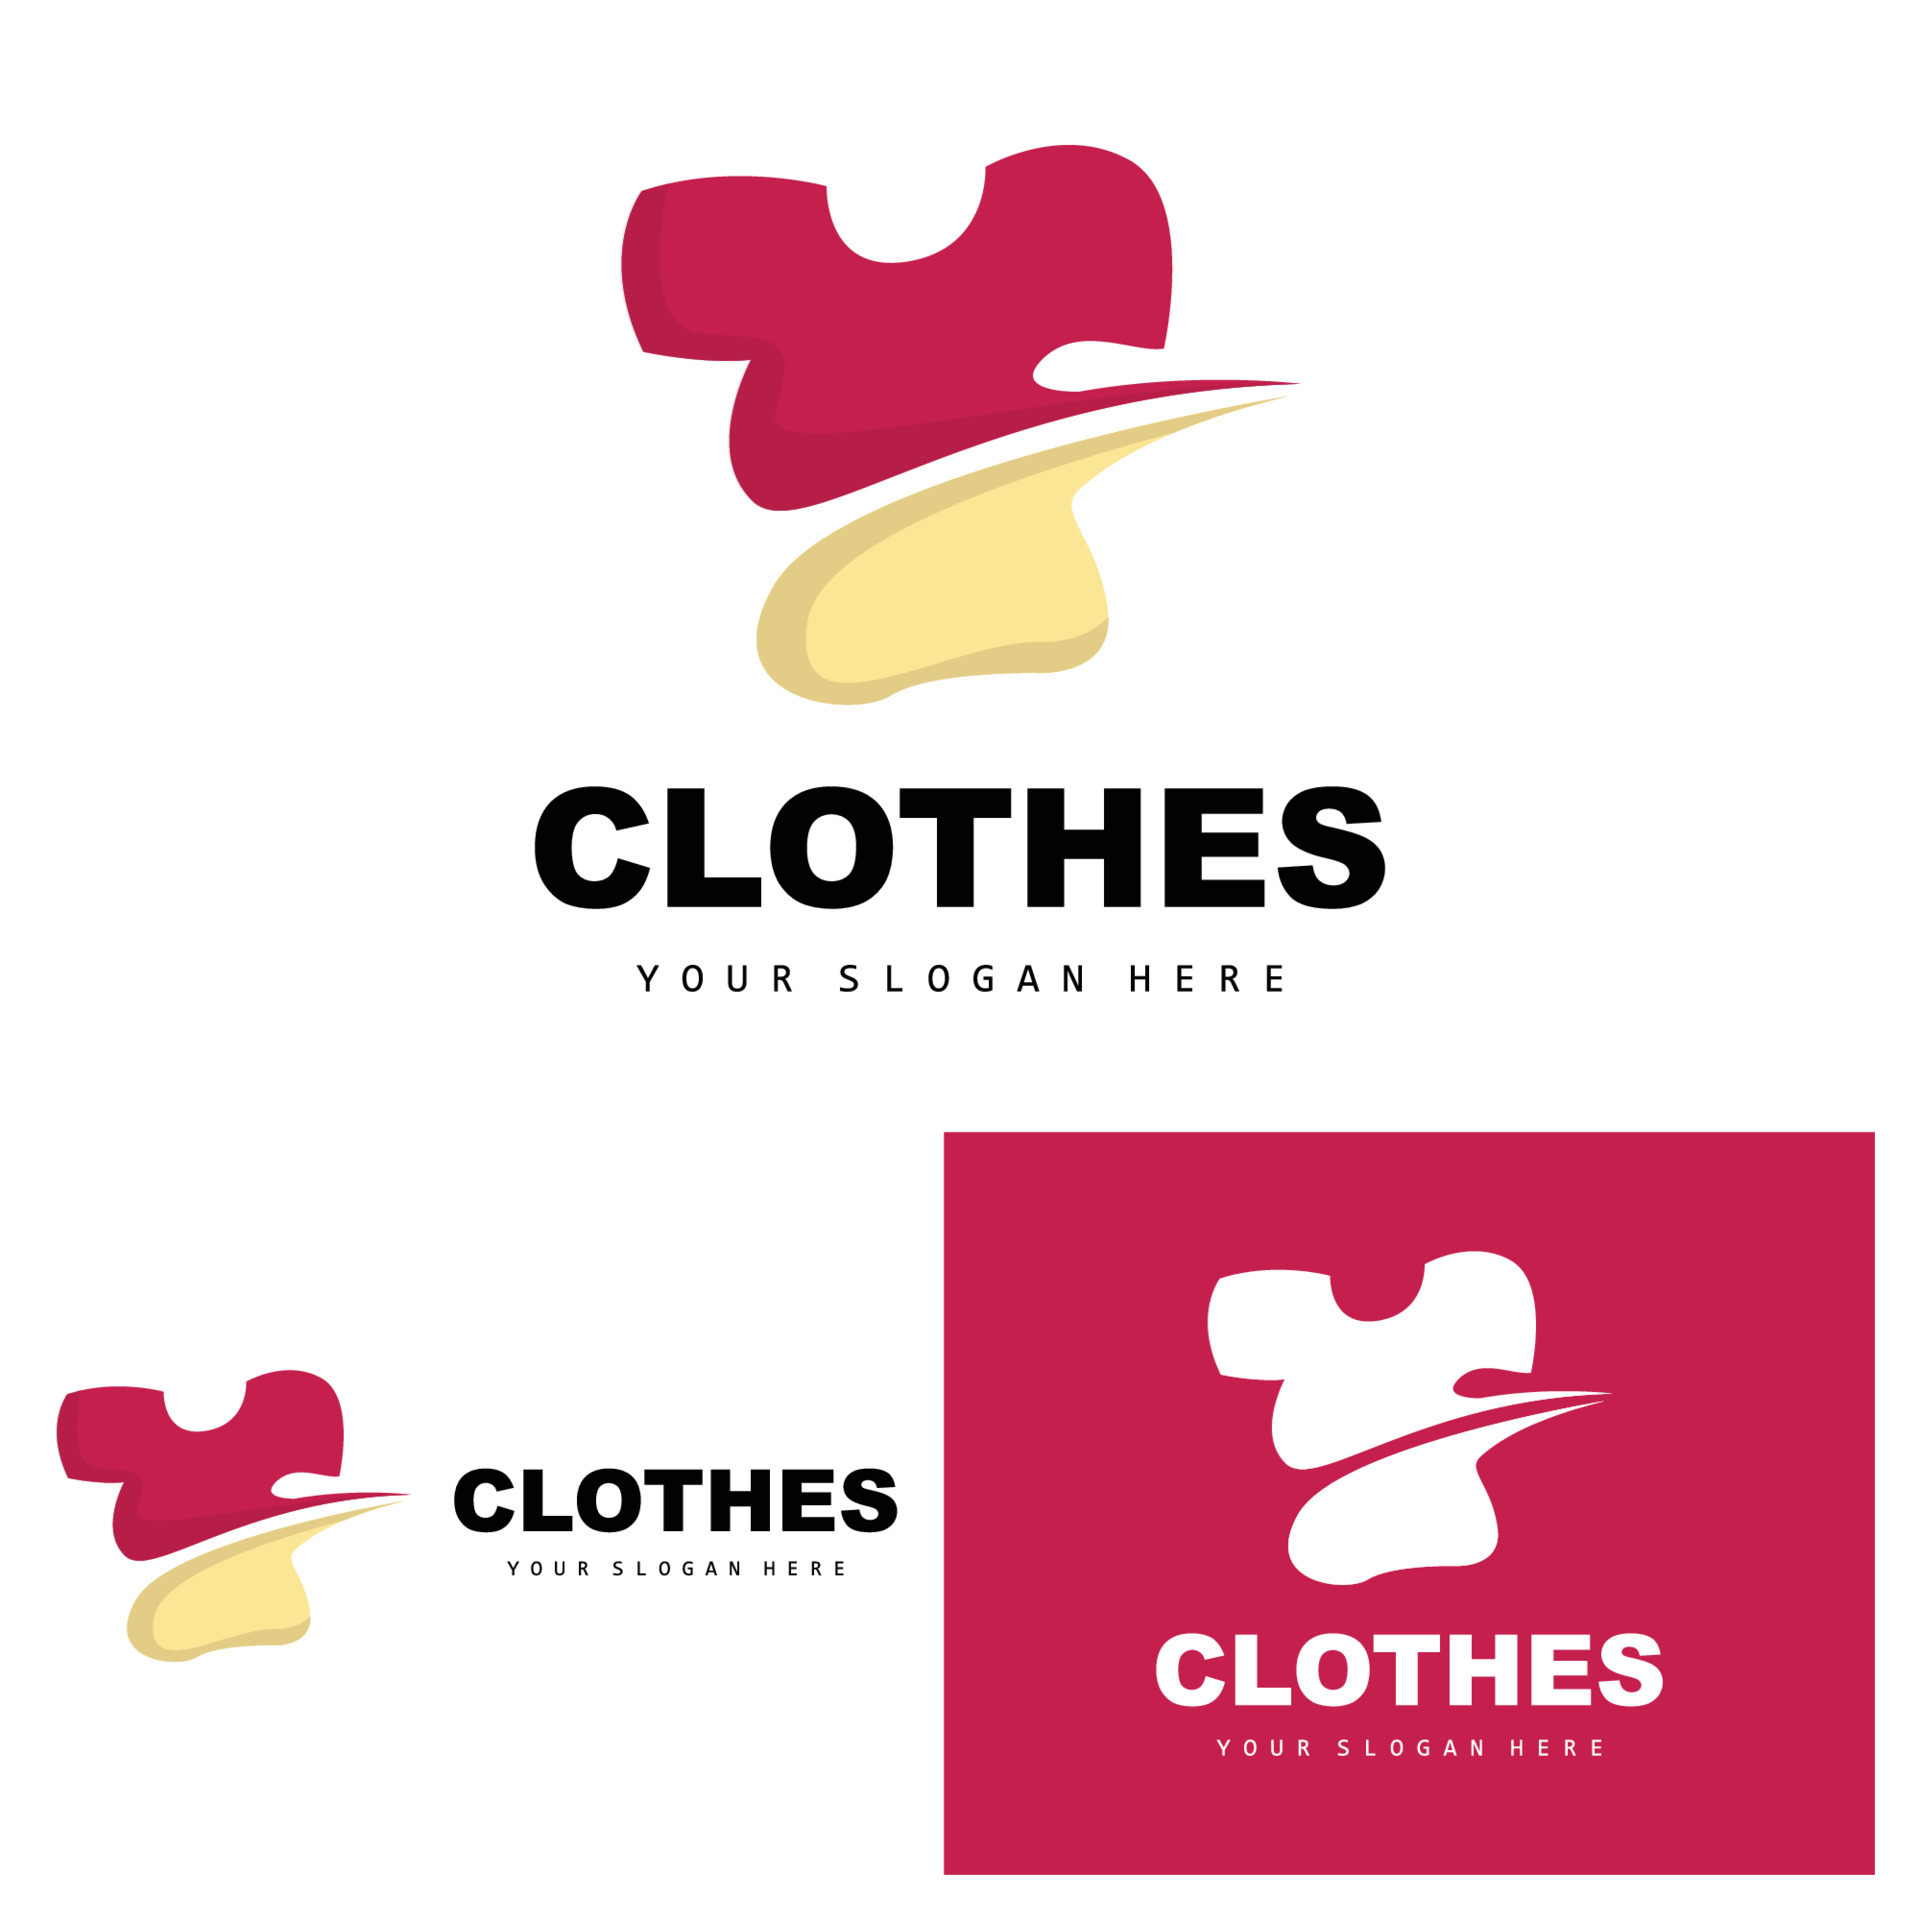 Clothing business logo png, fashion